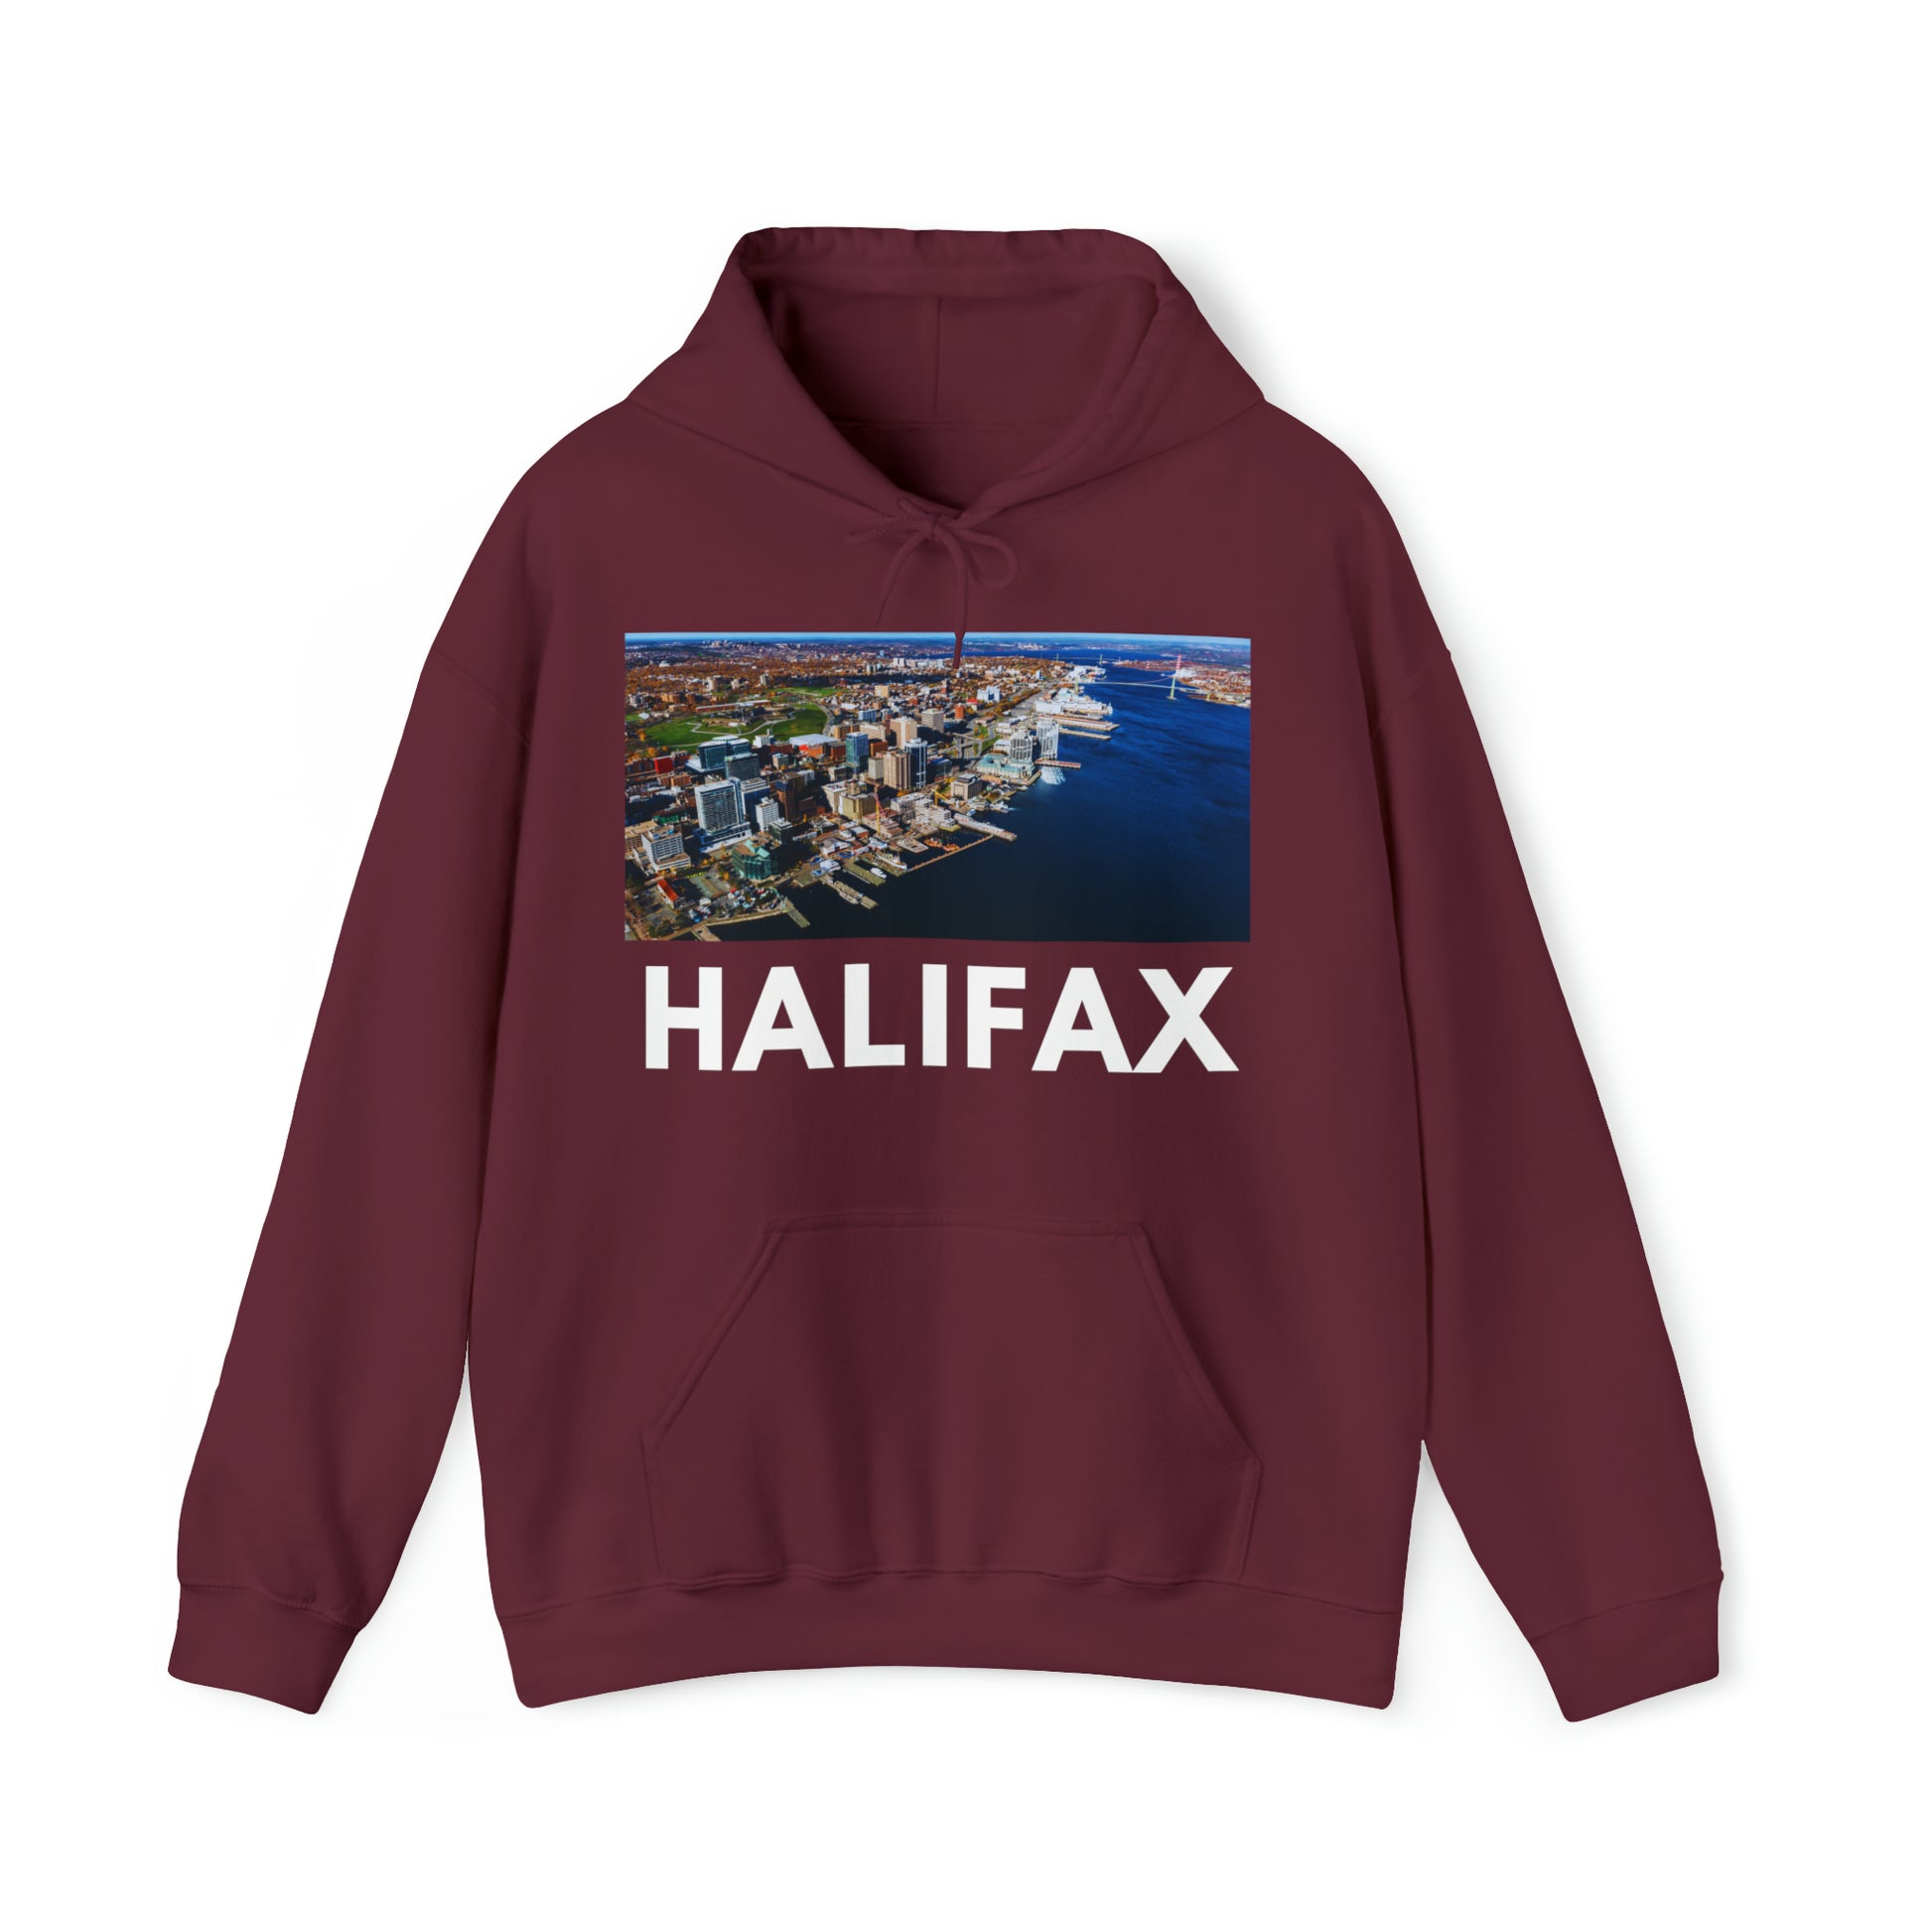 S Maroon Halifax Hoodie: The Waterfront from HoodySZN.com